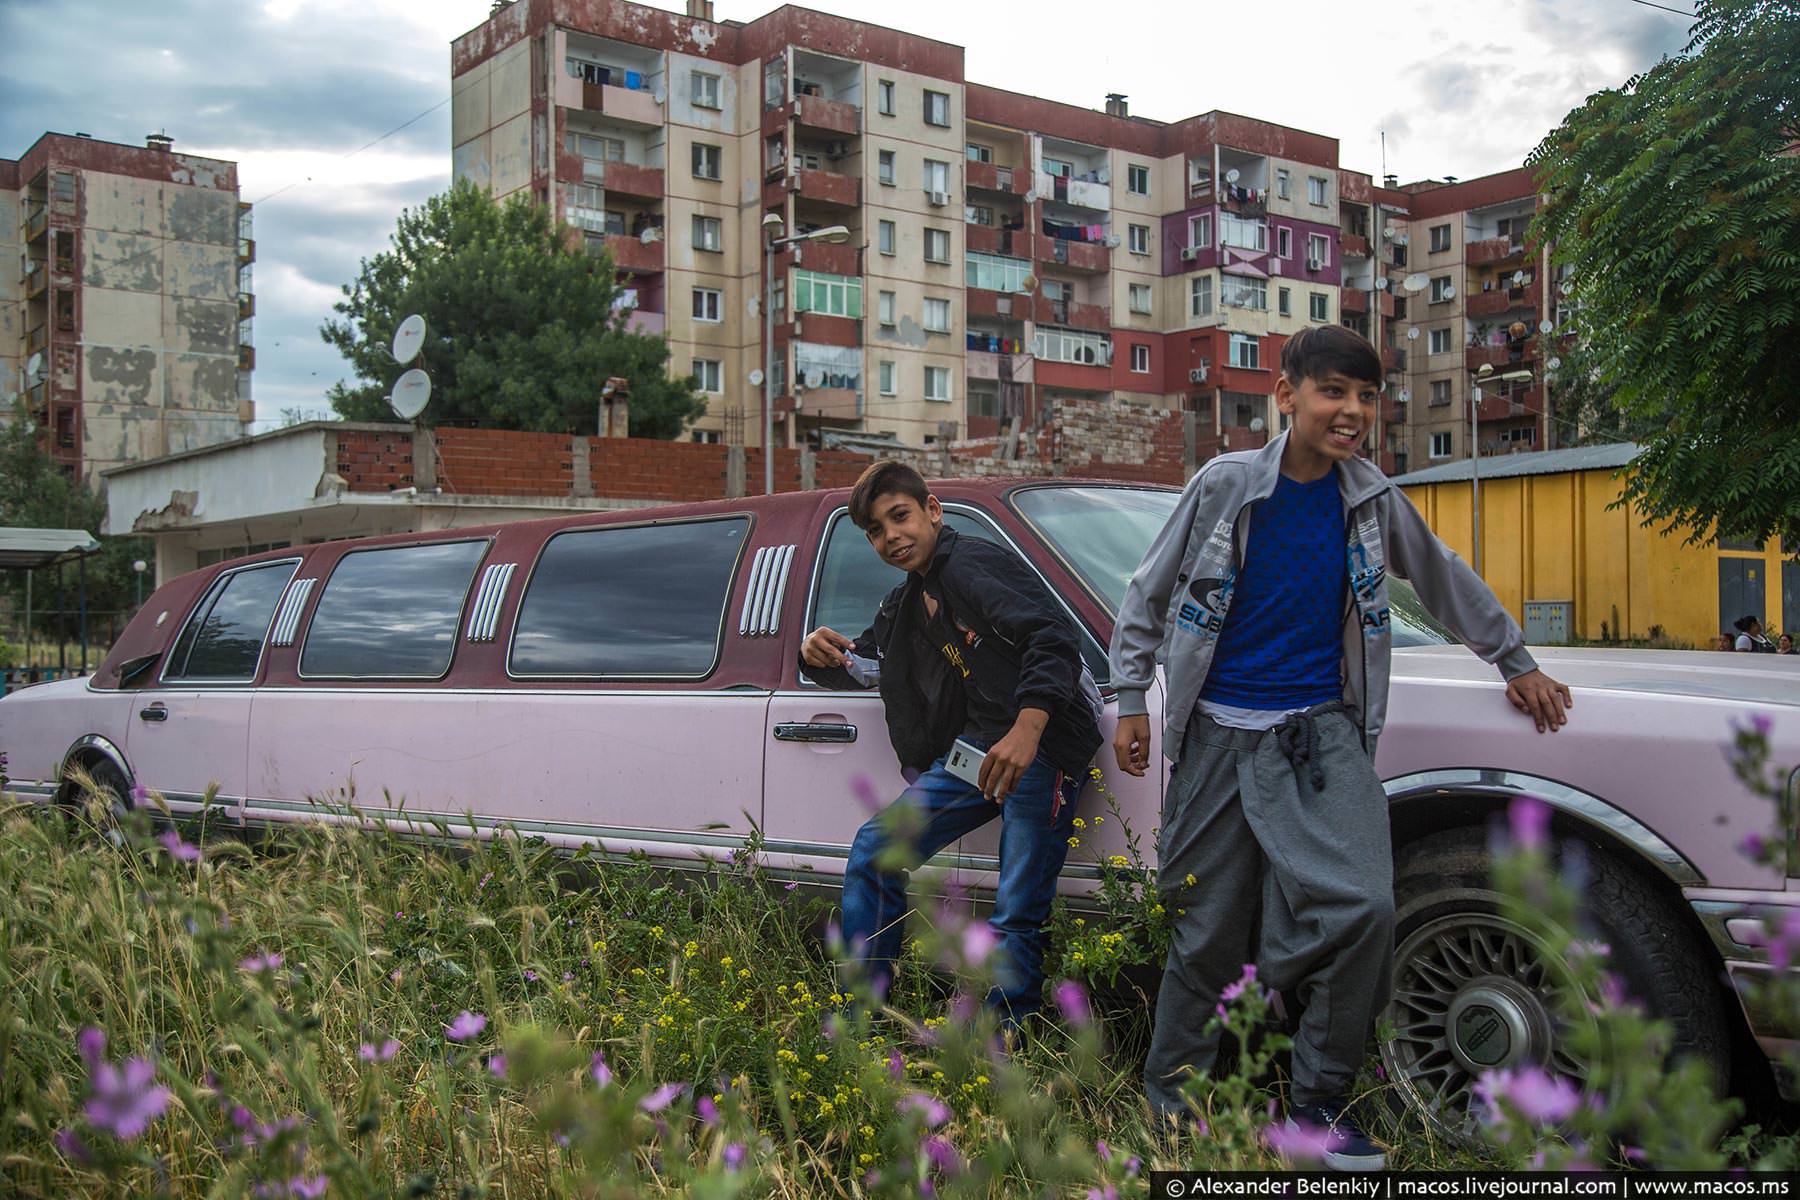 The gypsies in Bulgaria